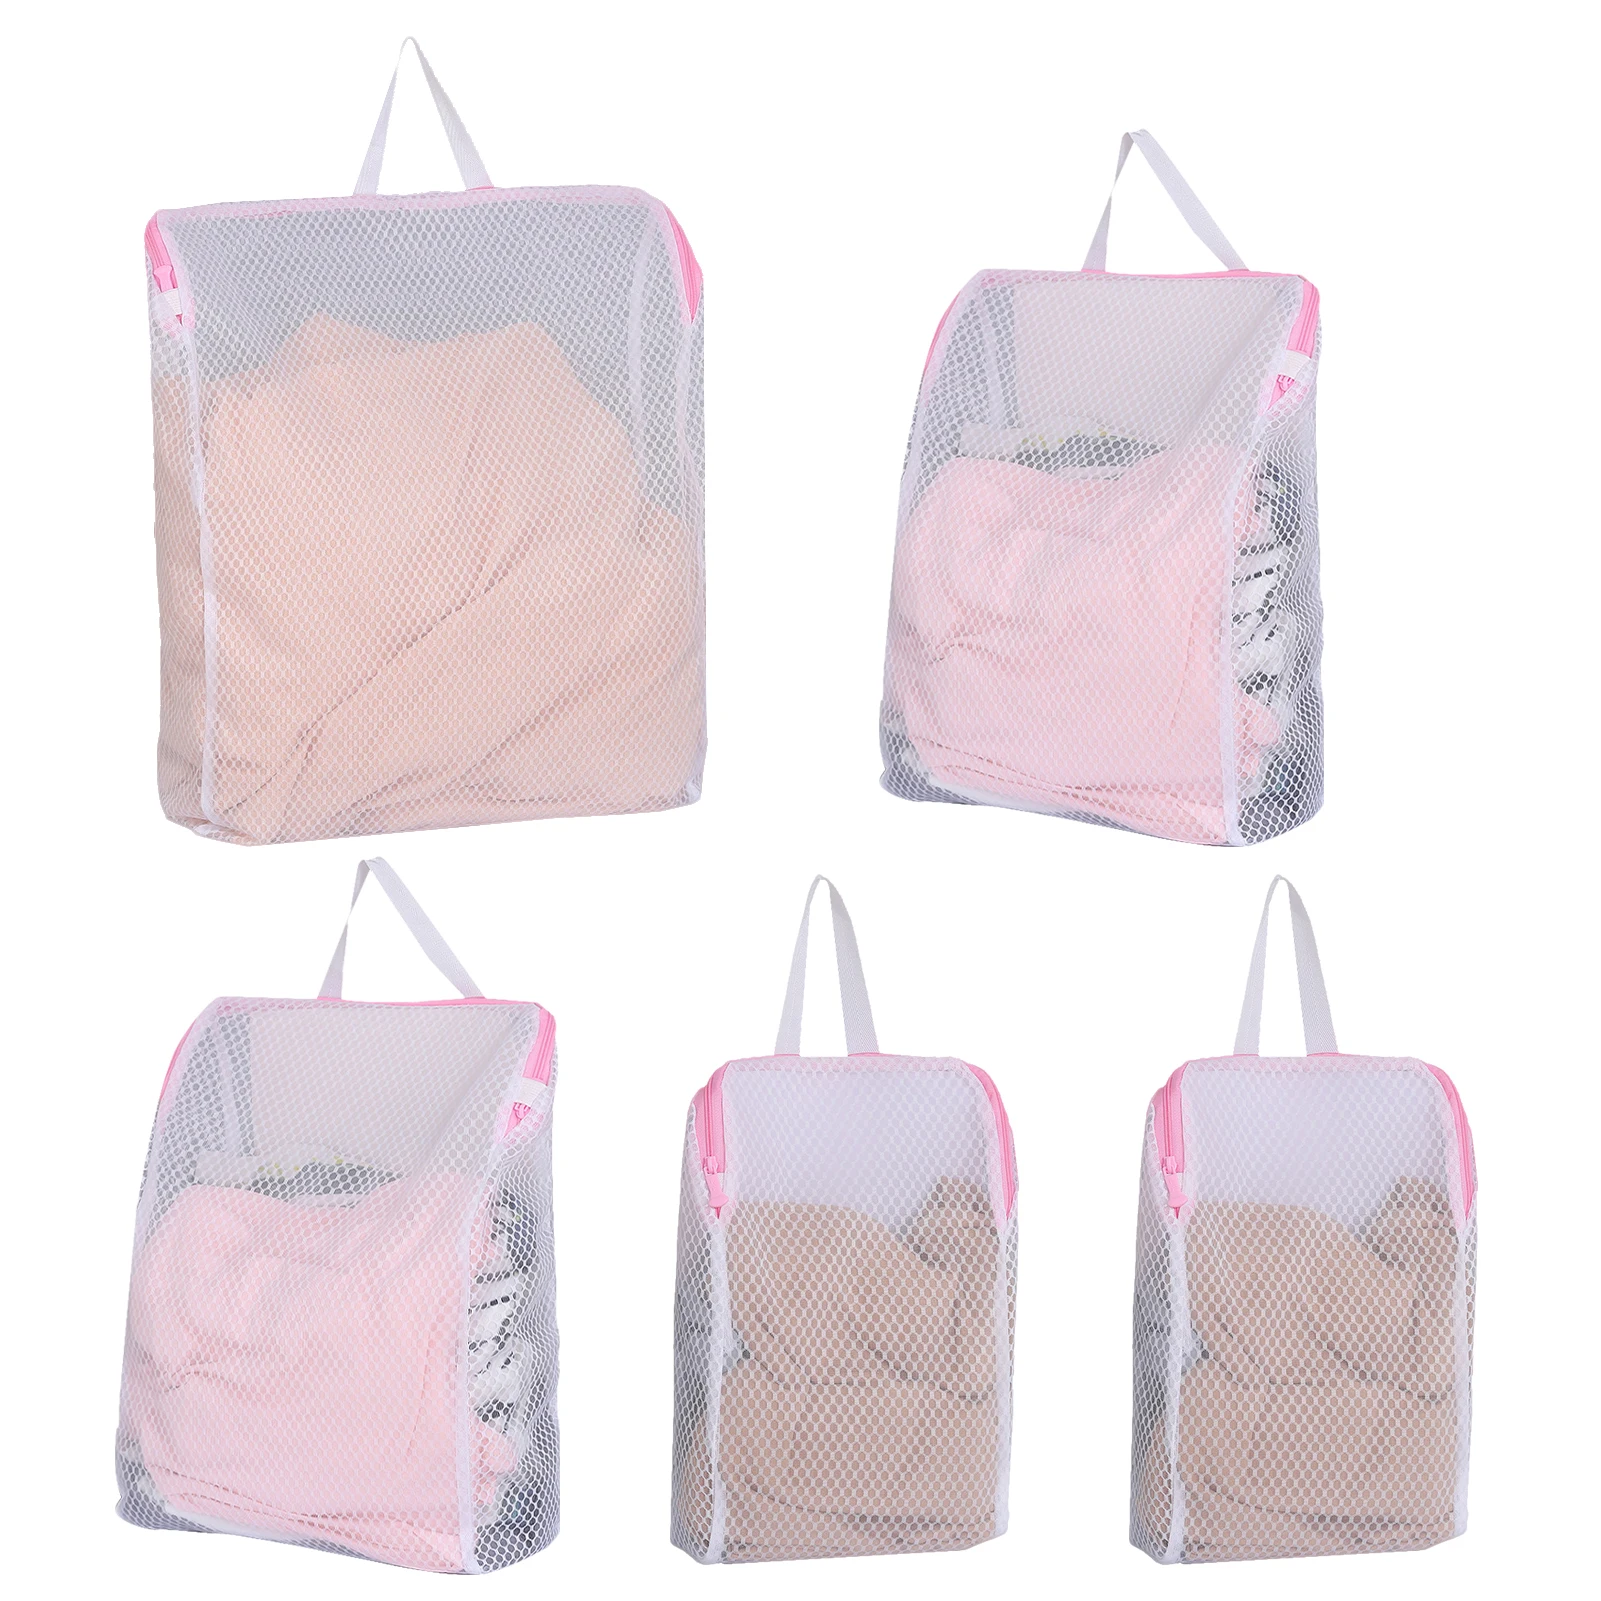 

5pcs Garment Laundry Bag Large Opening For Washing Machine Portable Bra 3 Sizes Baby Items Travel With Handle Honeycomb Zipper